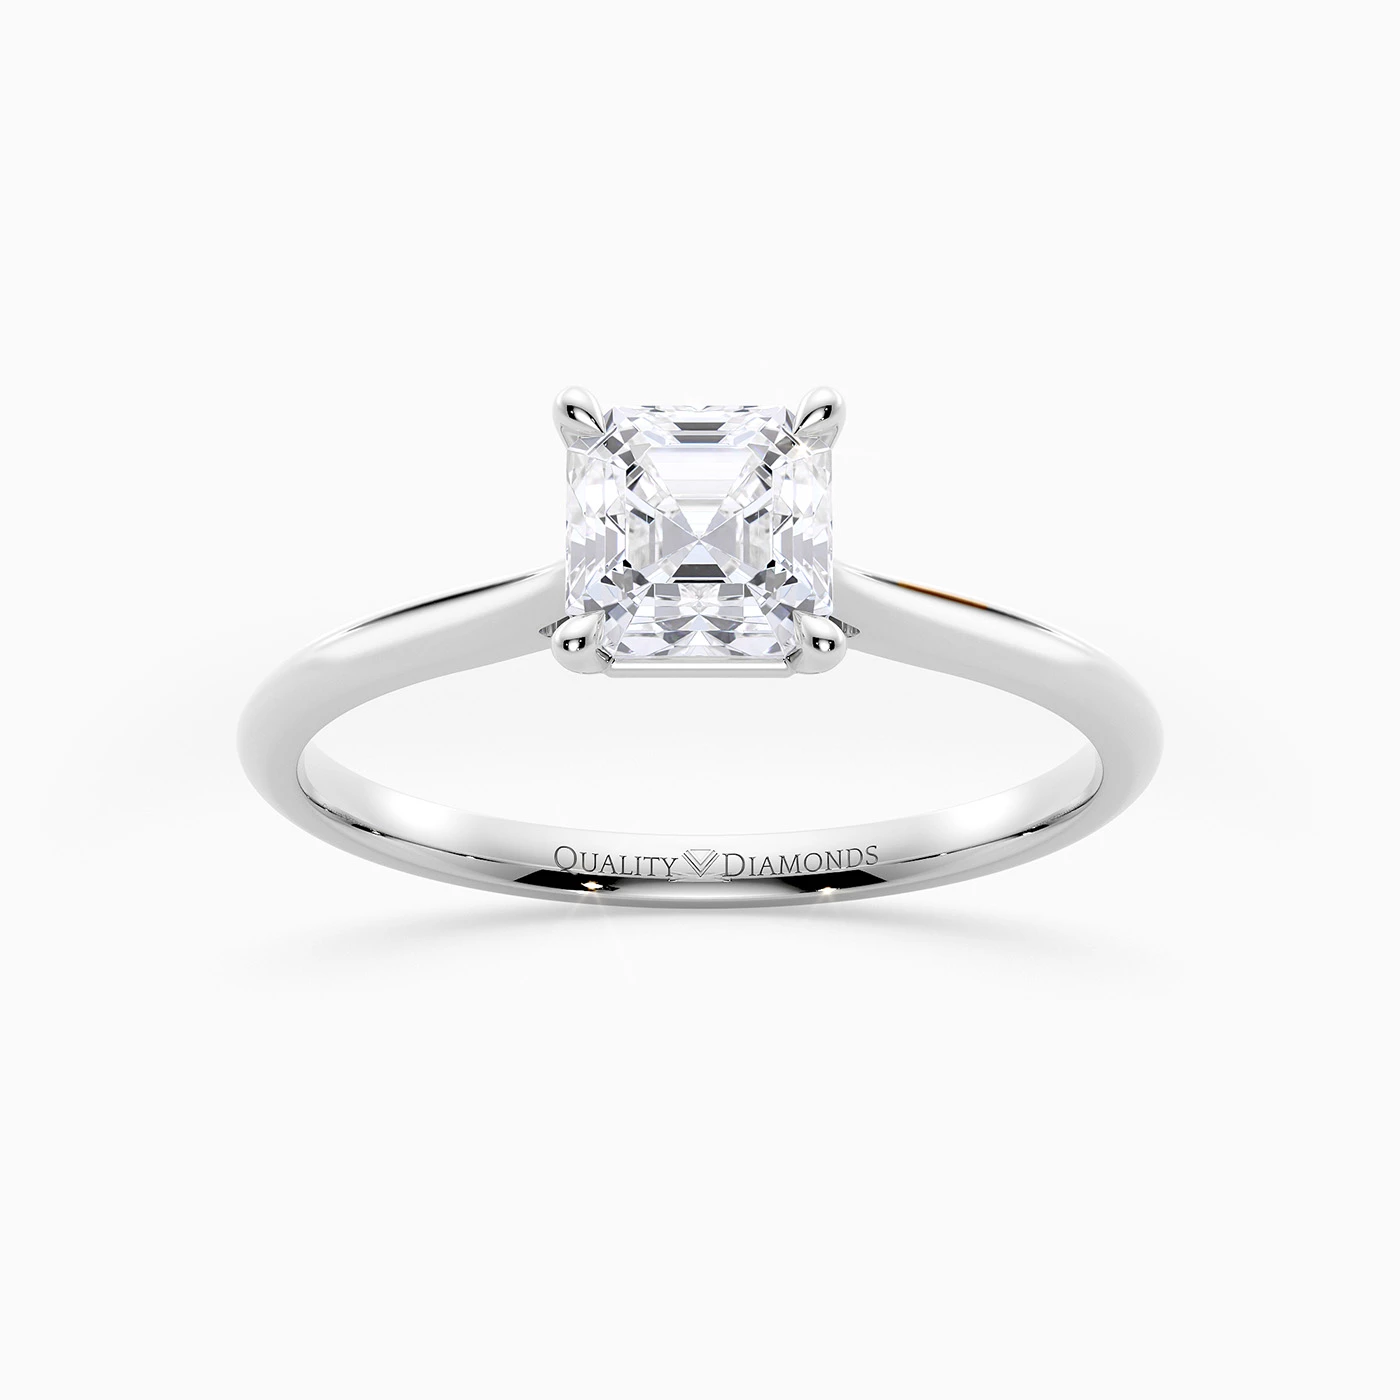 Asscher Carys Diamond Ring in 18K White Gold